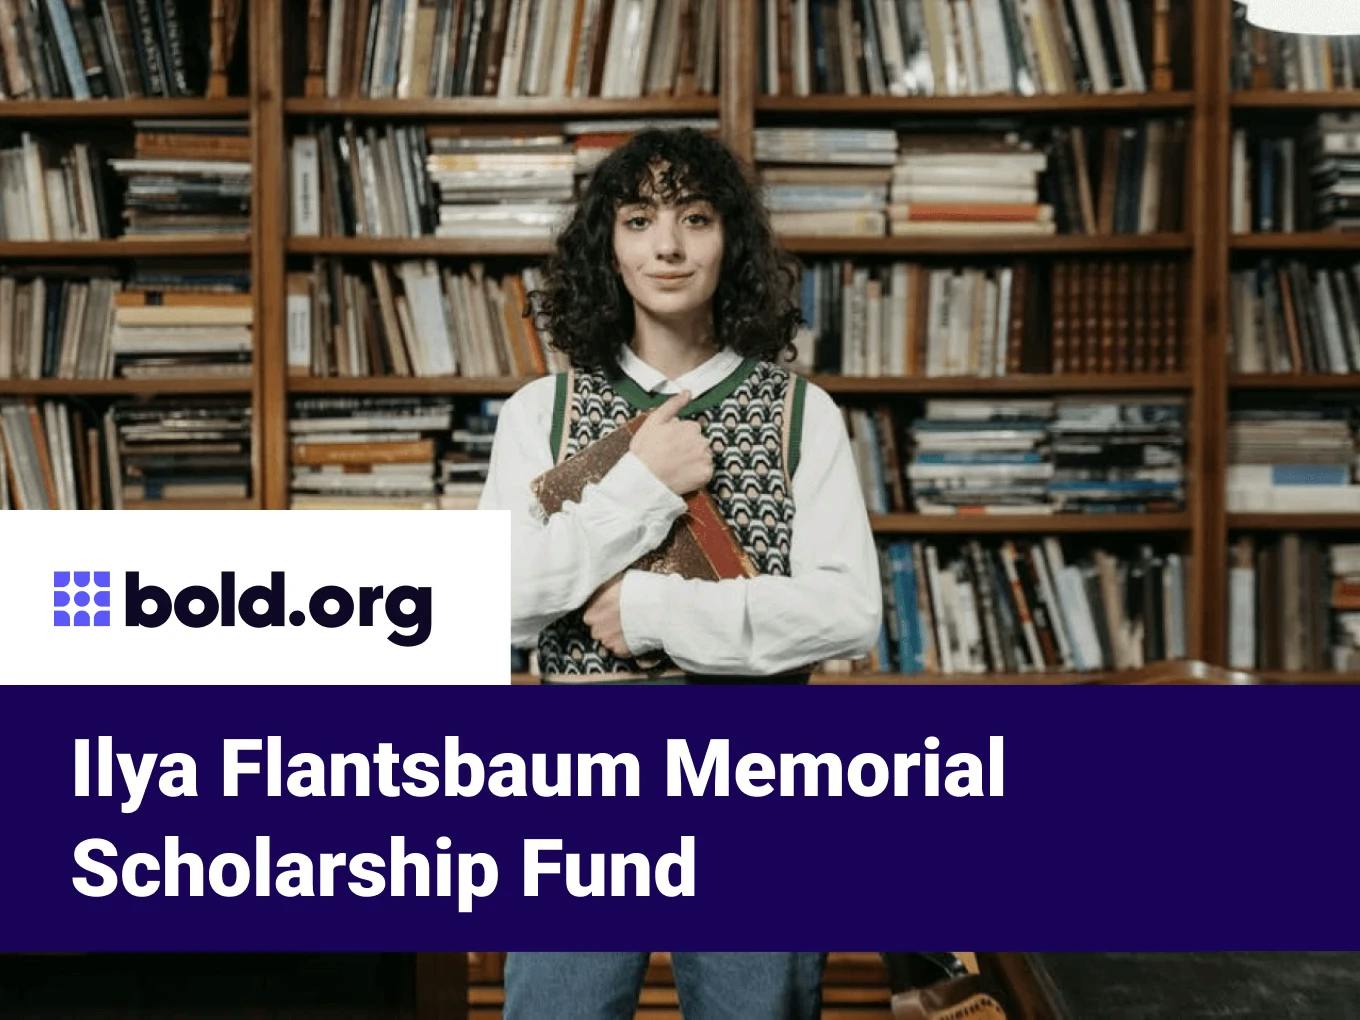 Ilya Flantsbaum Memorial Scholarship Fund